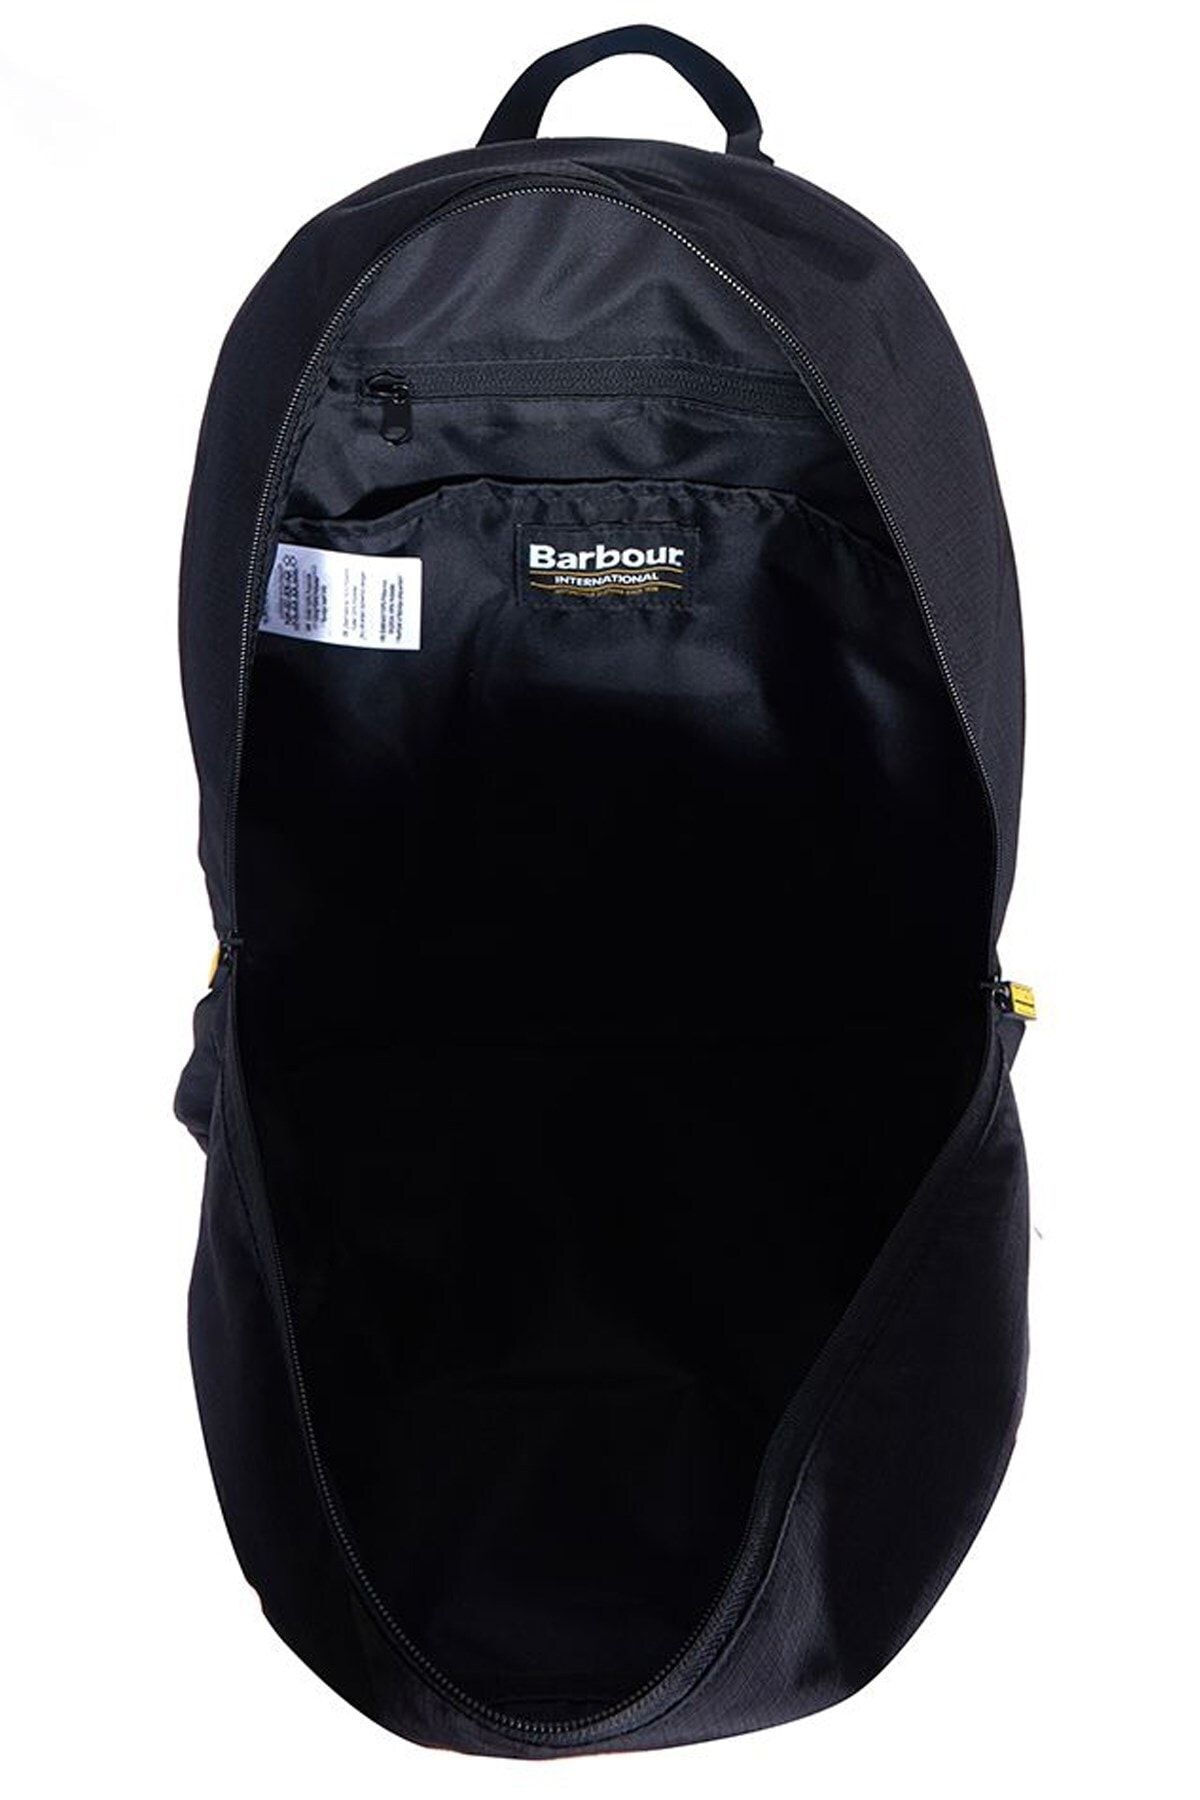 Barbour B.intl Ripstop Backpack BK11 مشکی